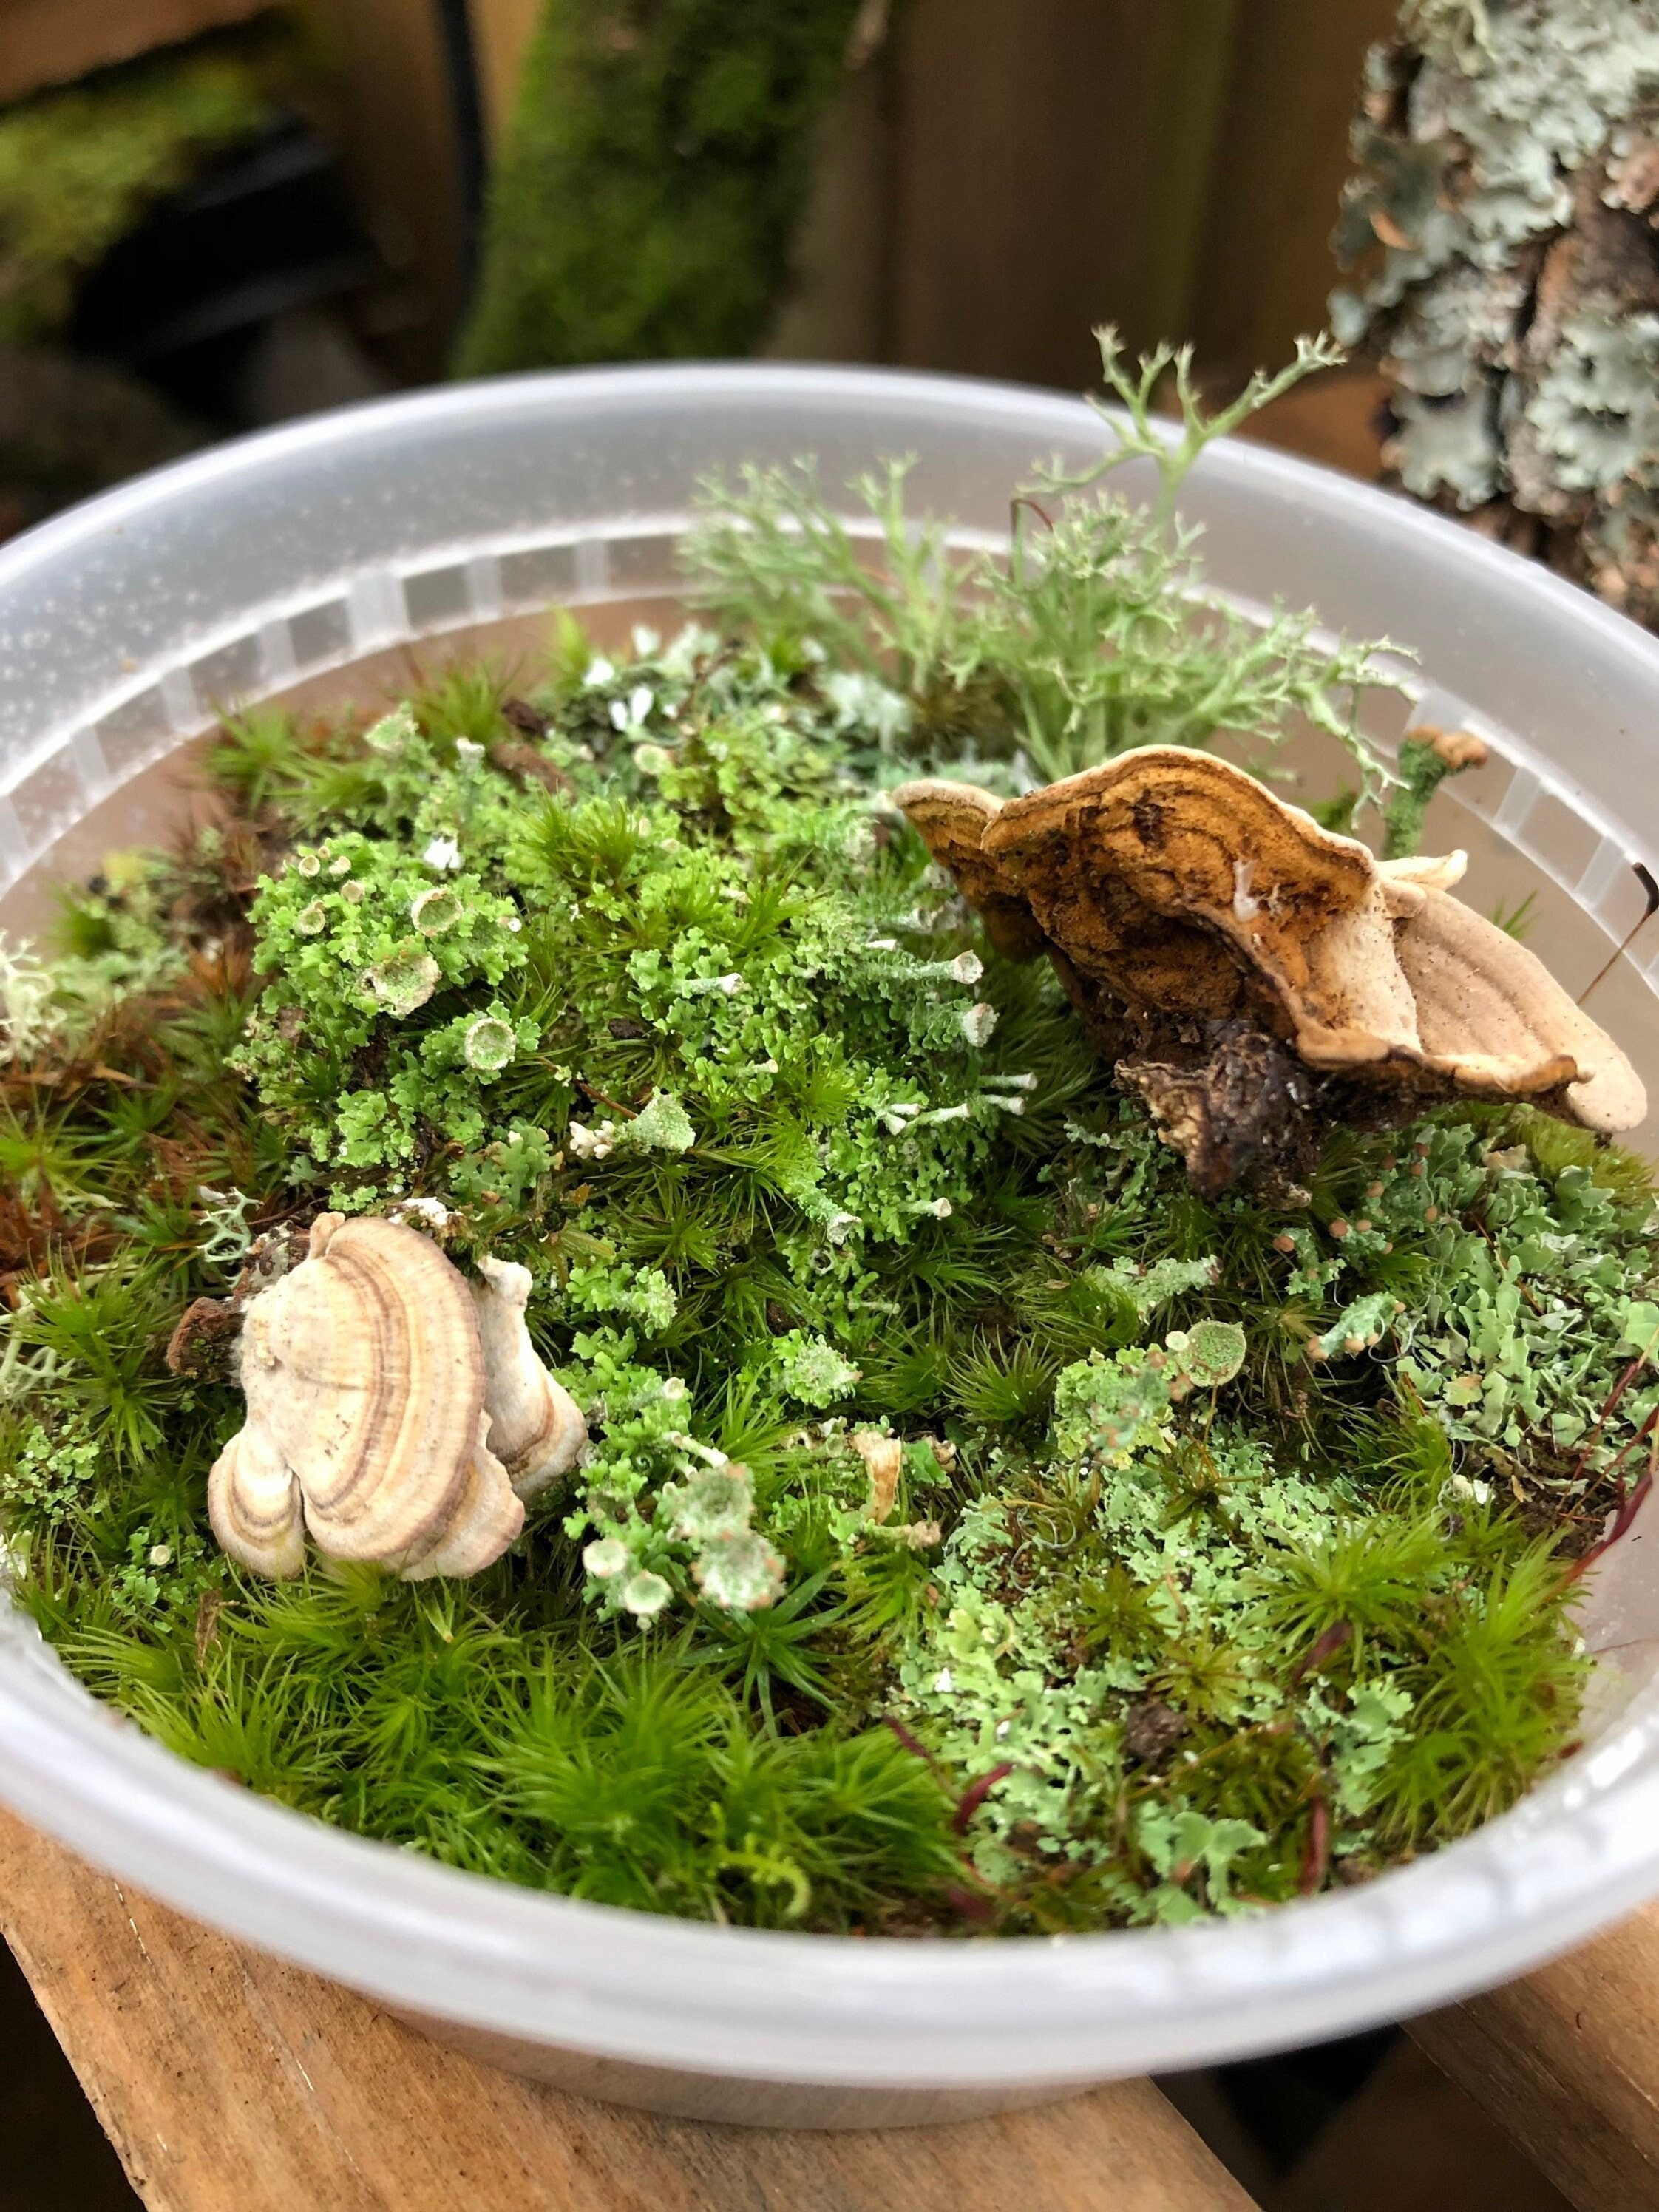 Live Moss & Lichen for Terrariums